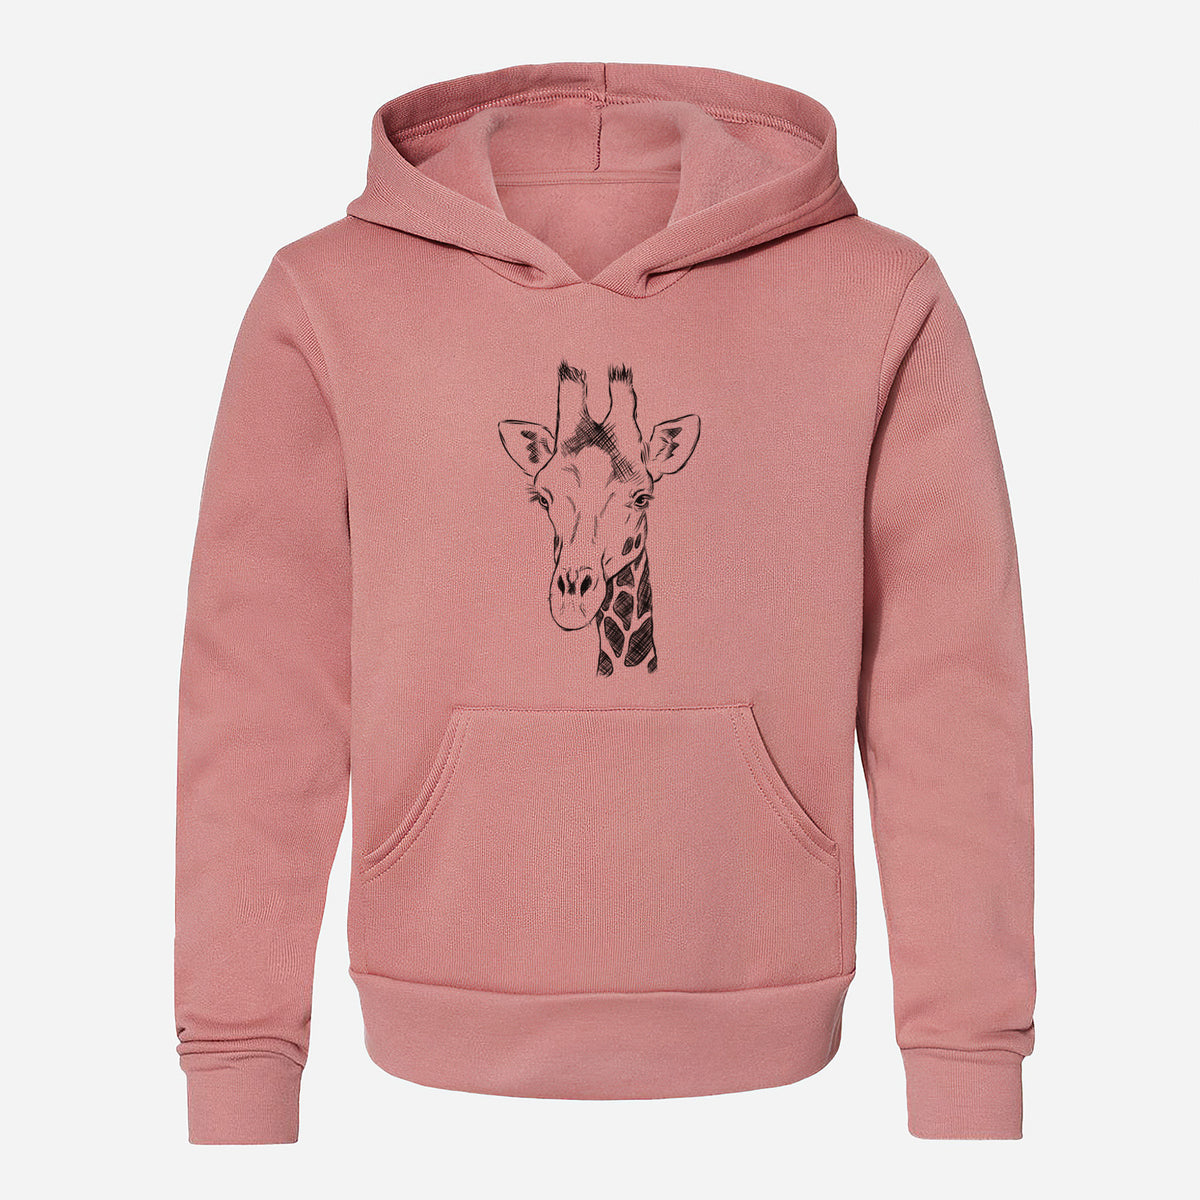 Southern Giraffe - Giraffa giraffa - Youth Hoodie Sweatshirt